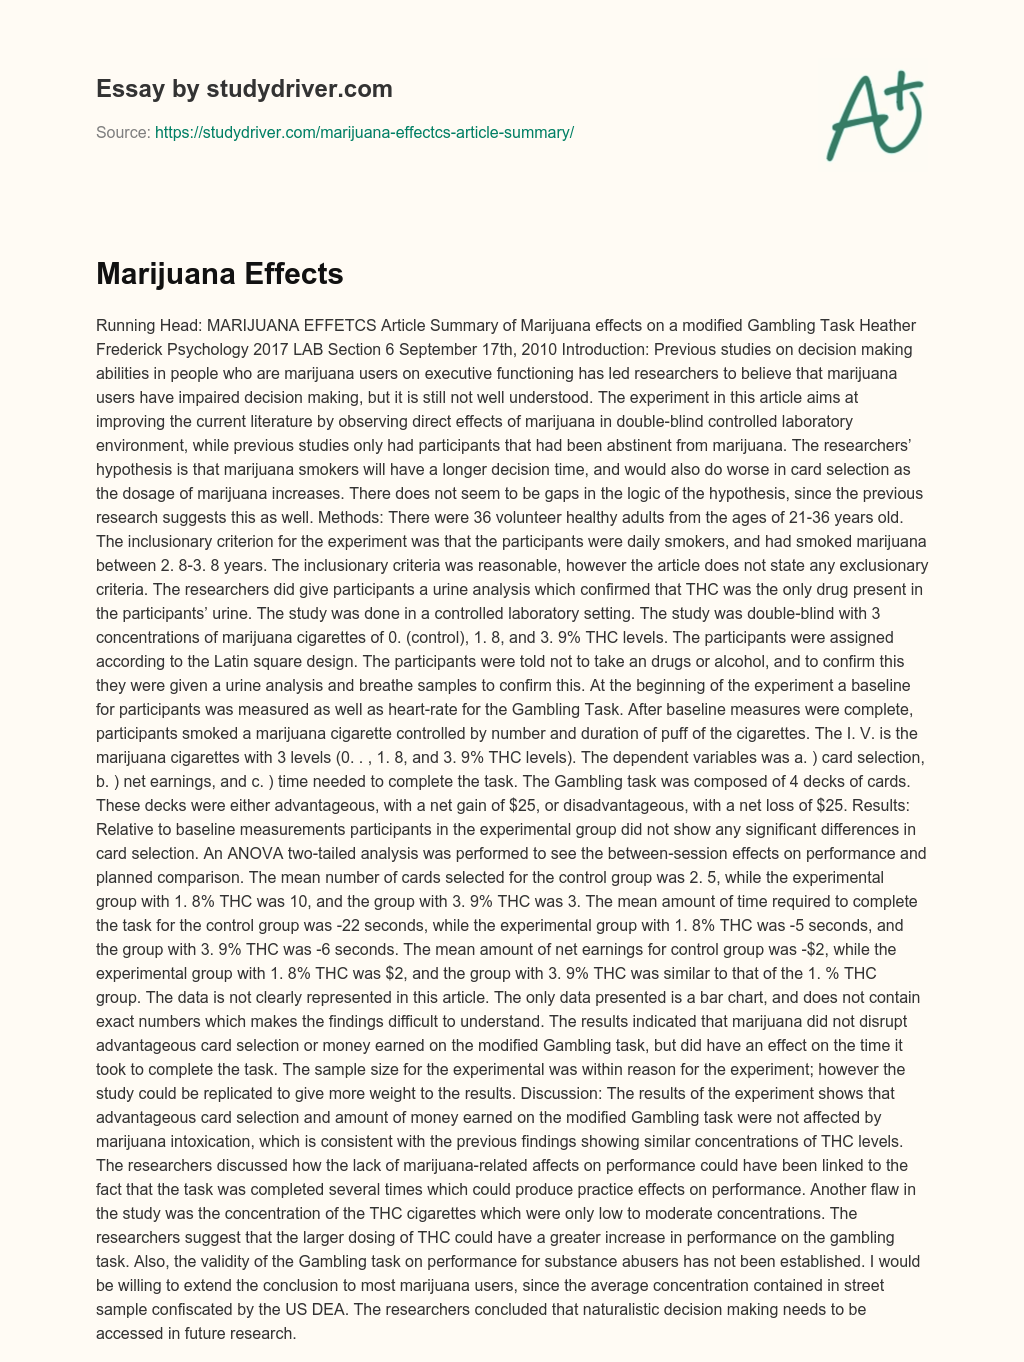 Marijuana Effectcs essay